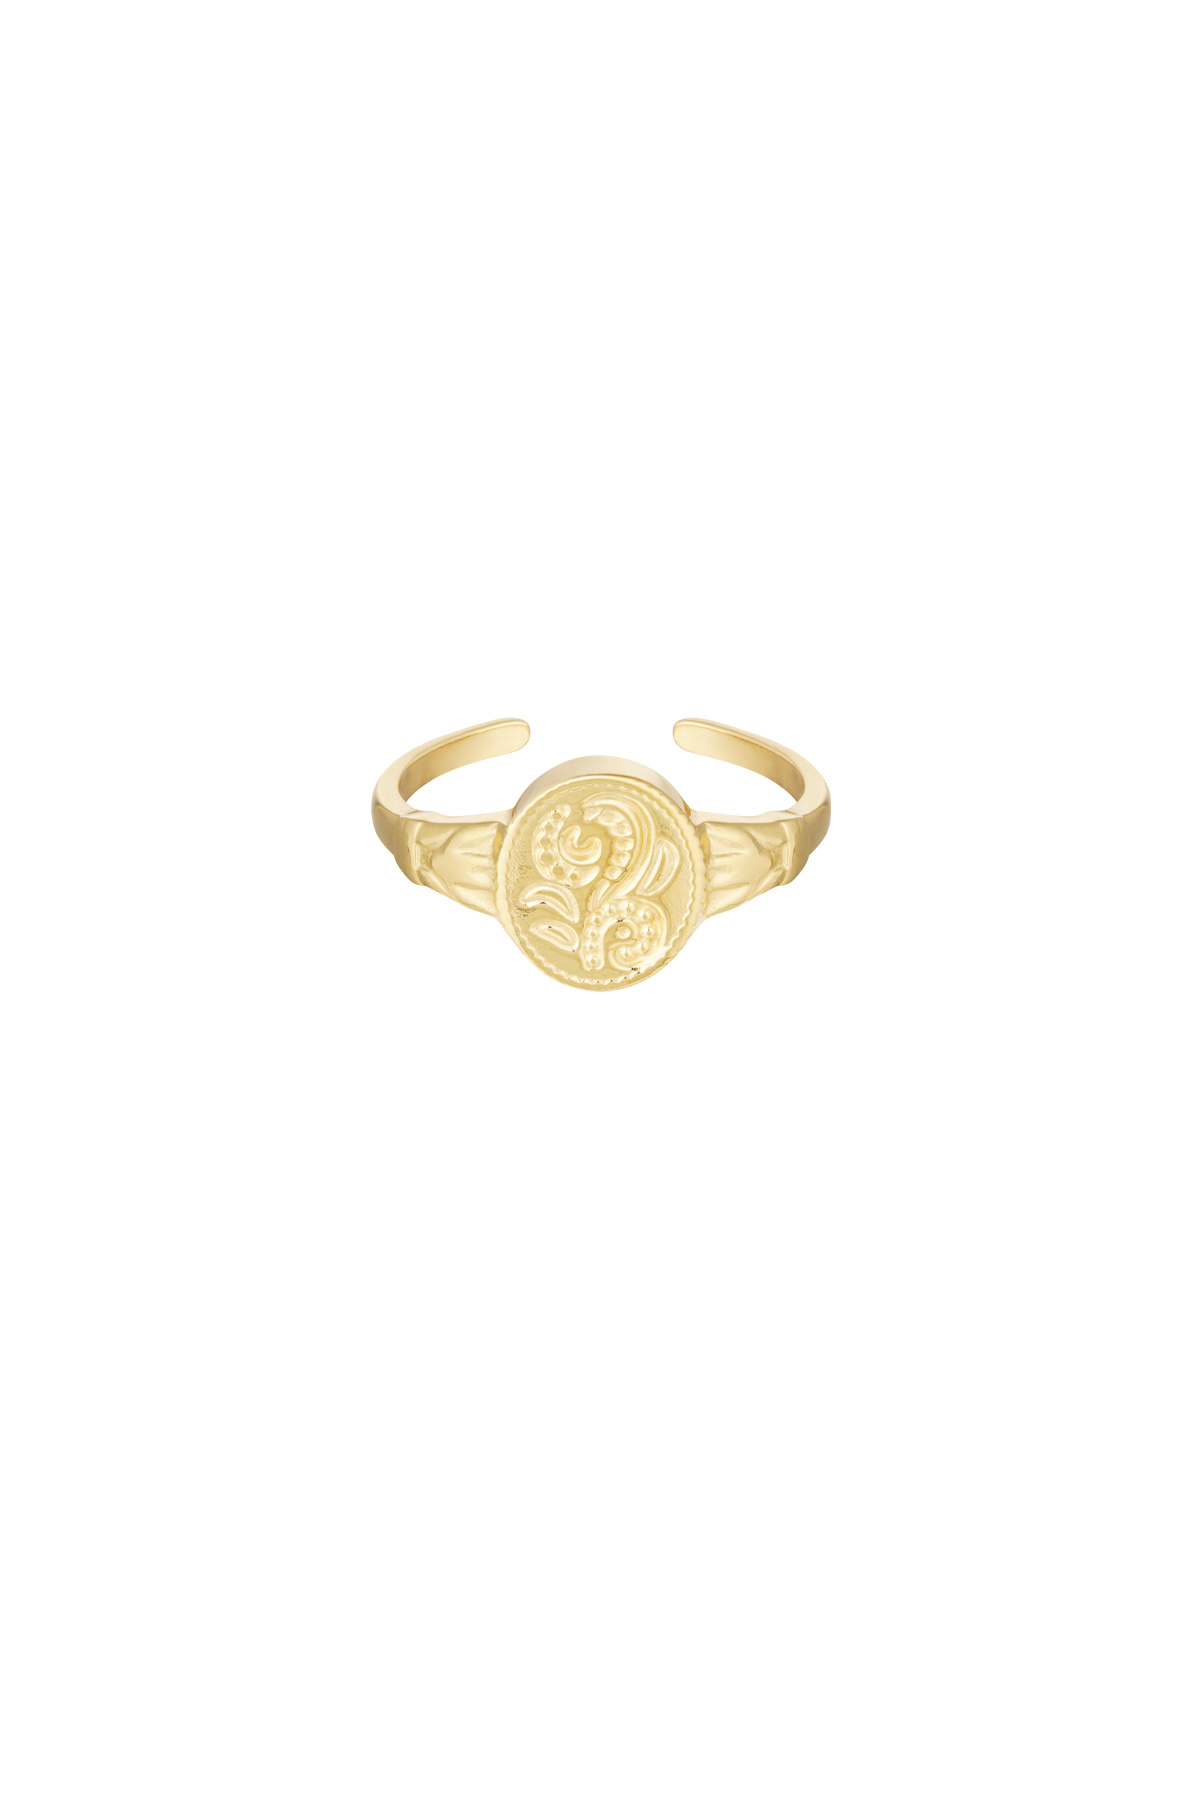 Ring bloem one size - goud h5 